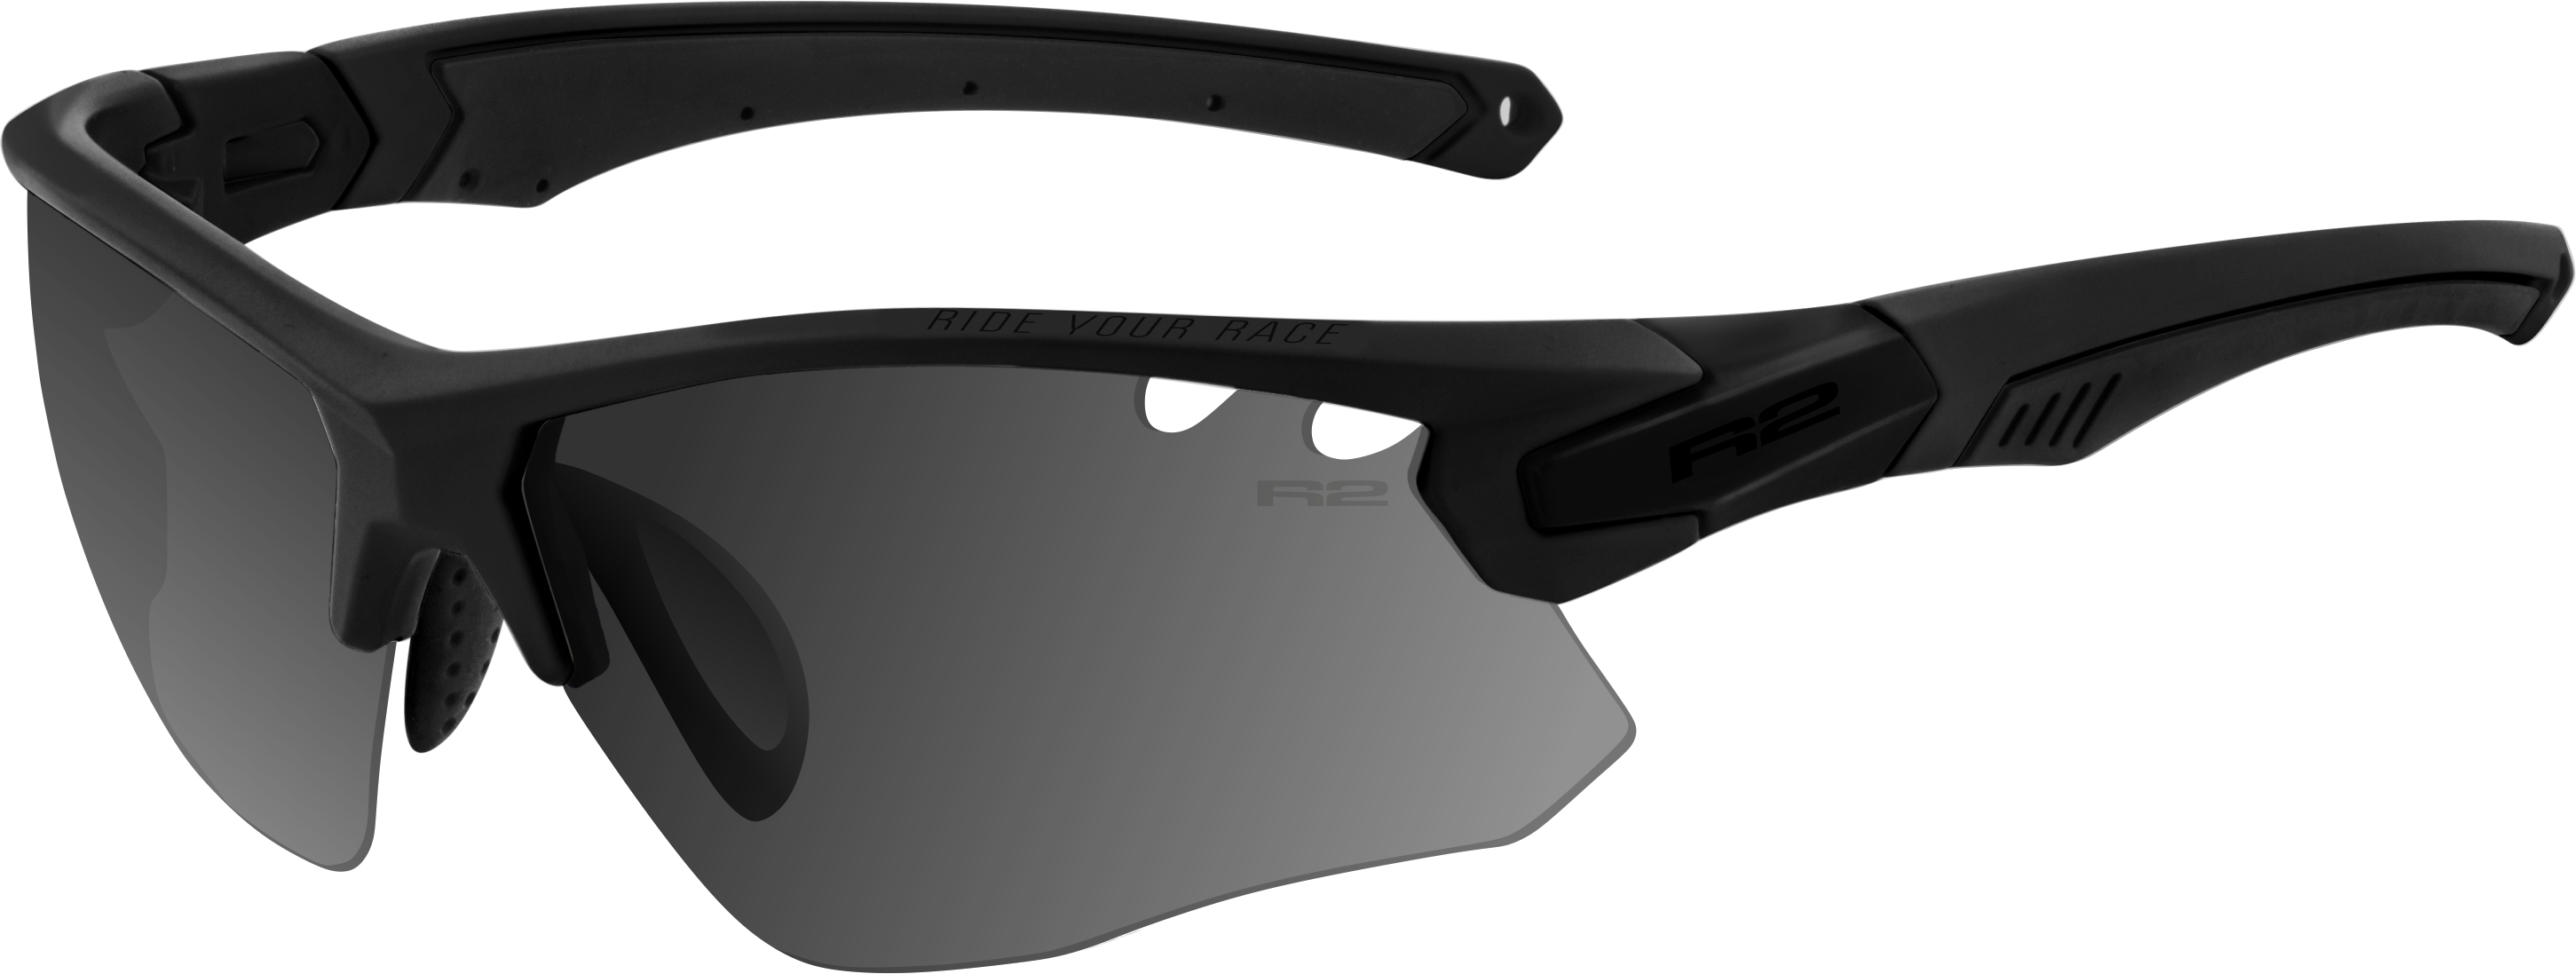 Sport sunglasses R2 CROWN AT078Z standard